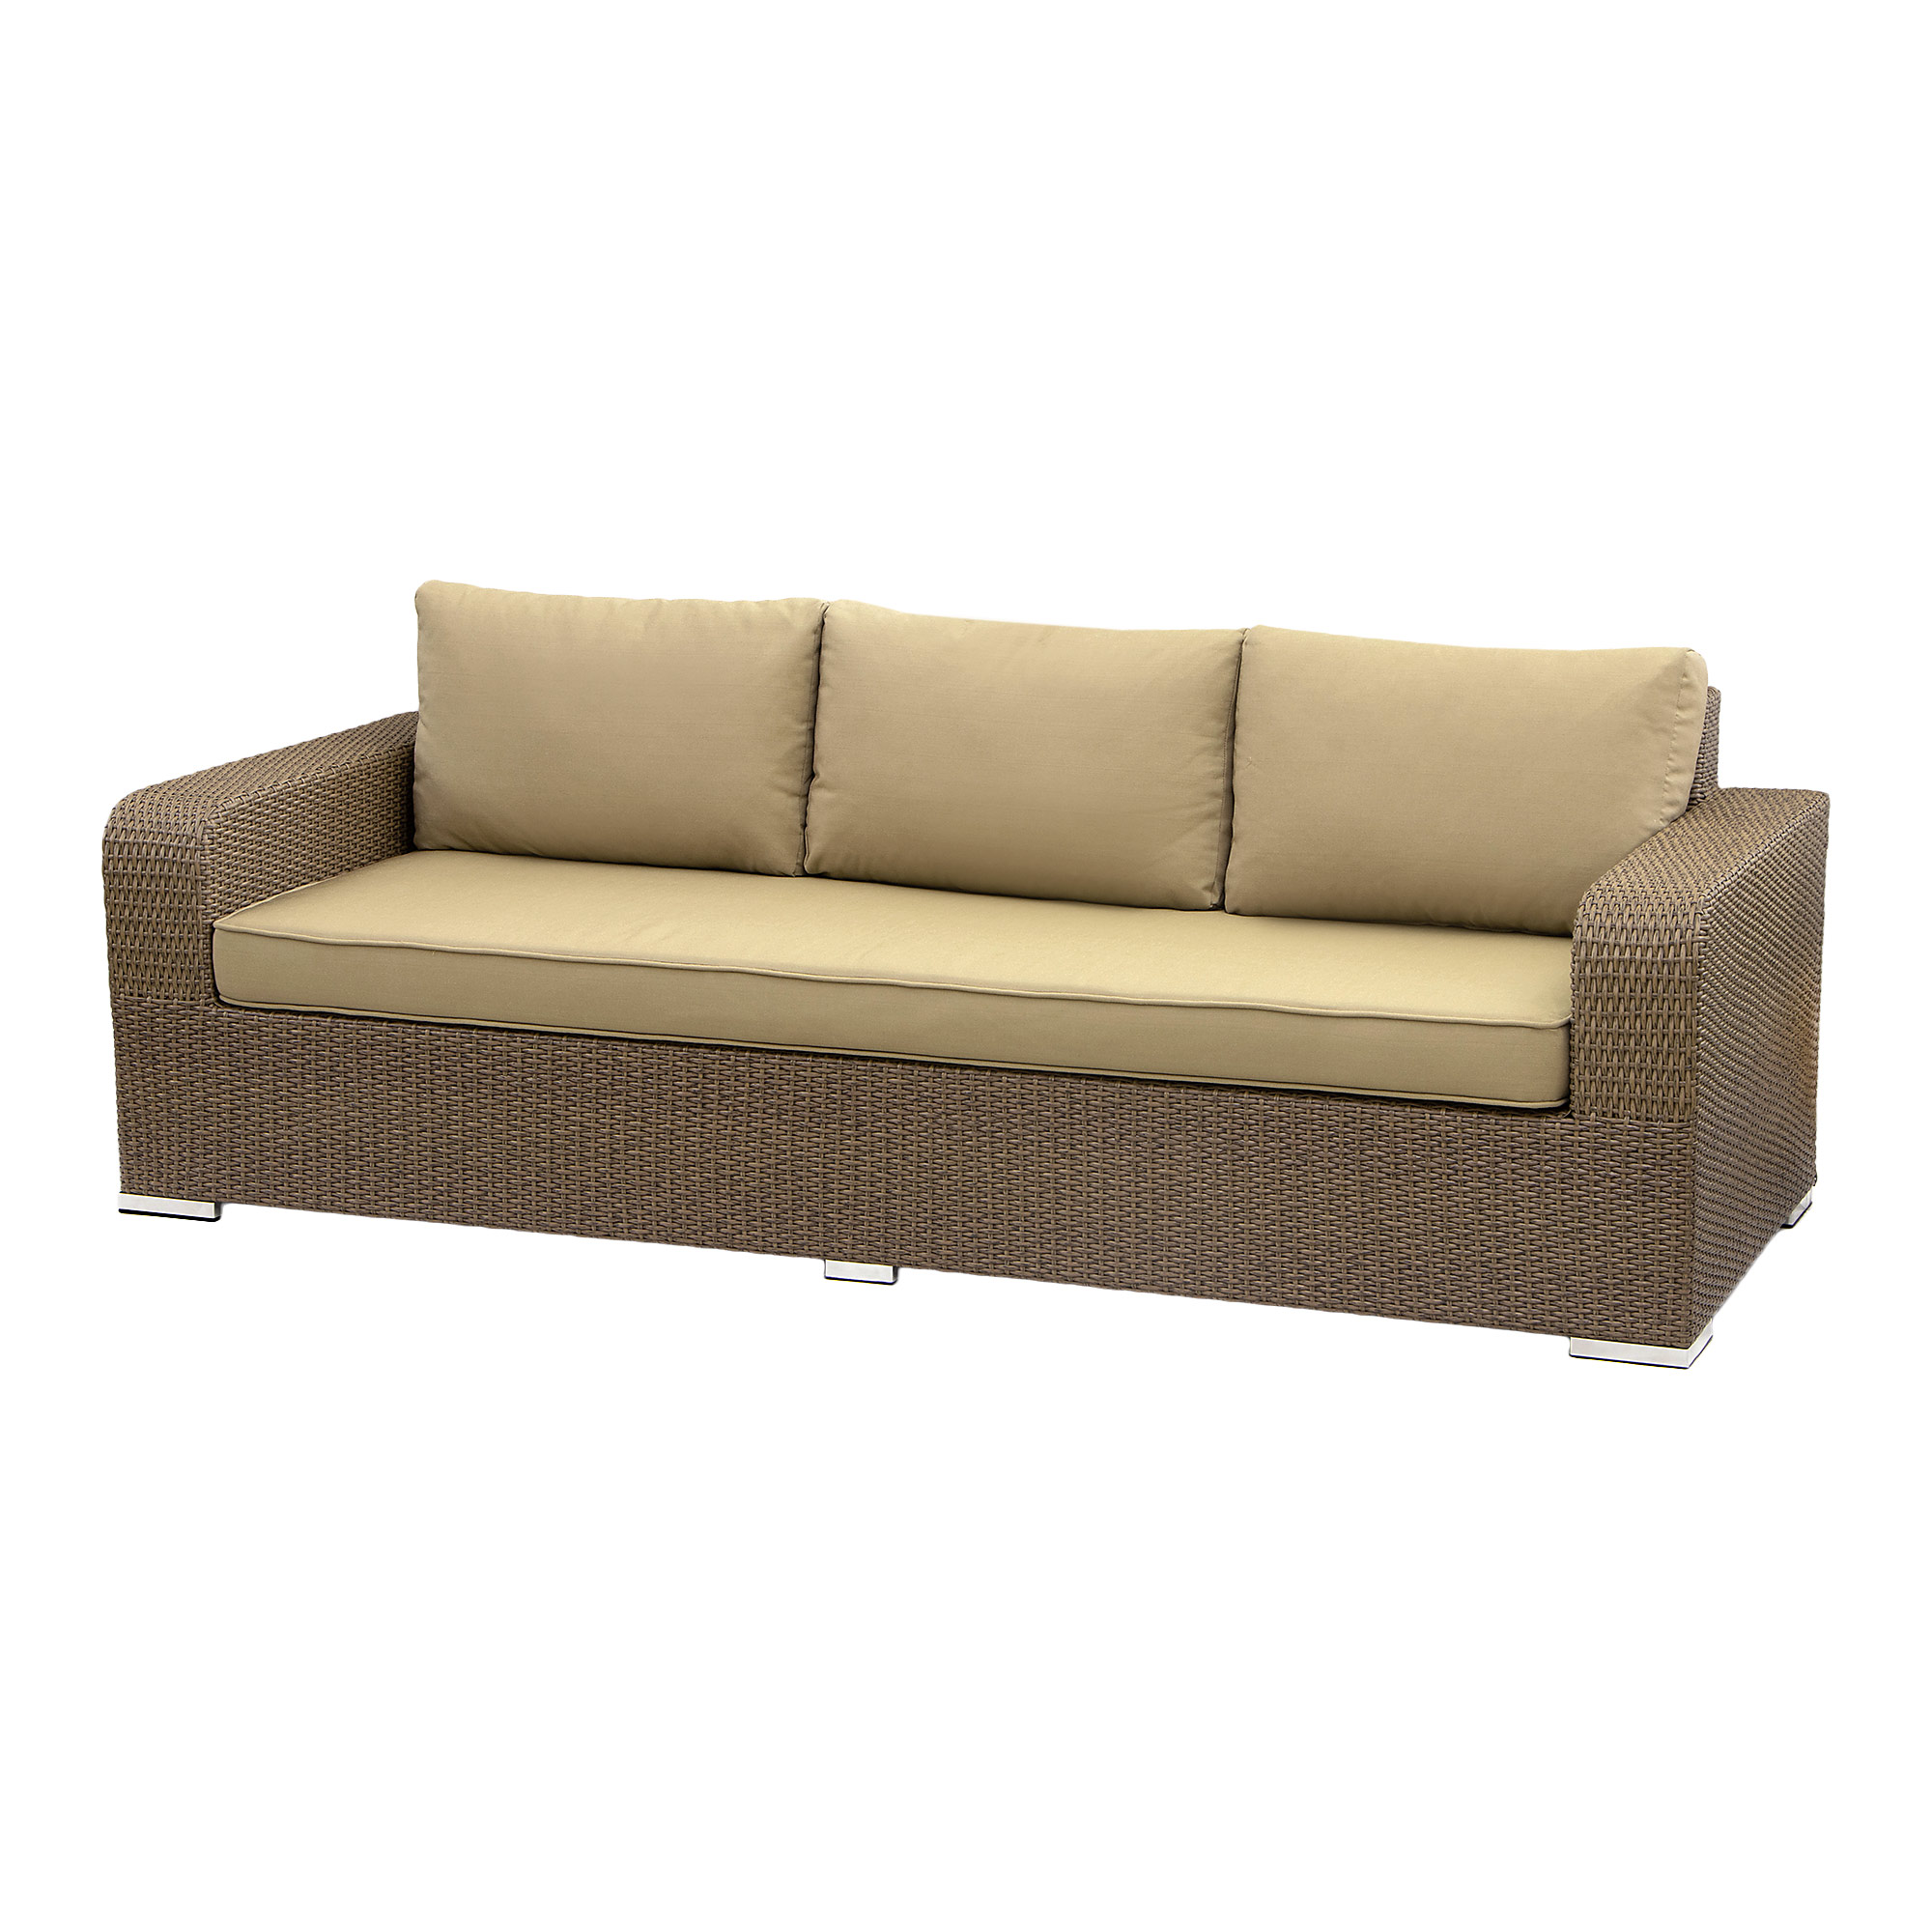 Комплект мебели Mavi Rattan 012 dkst, цвет бежевый, размер диван трехместный 90х224х76 см, диван двухместный 90х159х76 см - фото 2